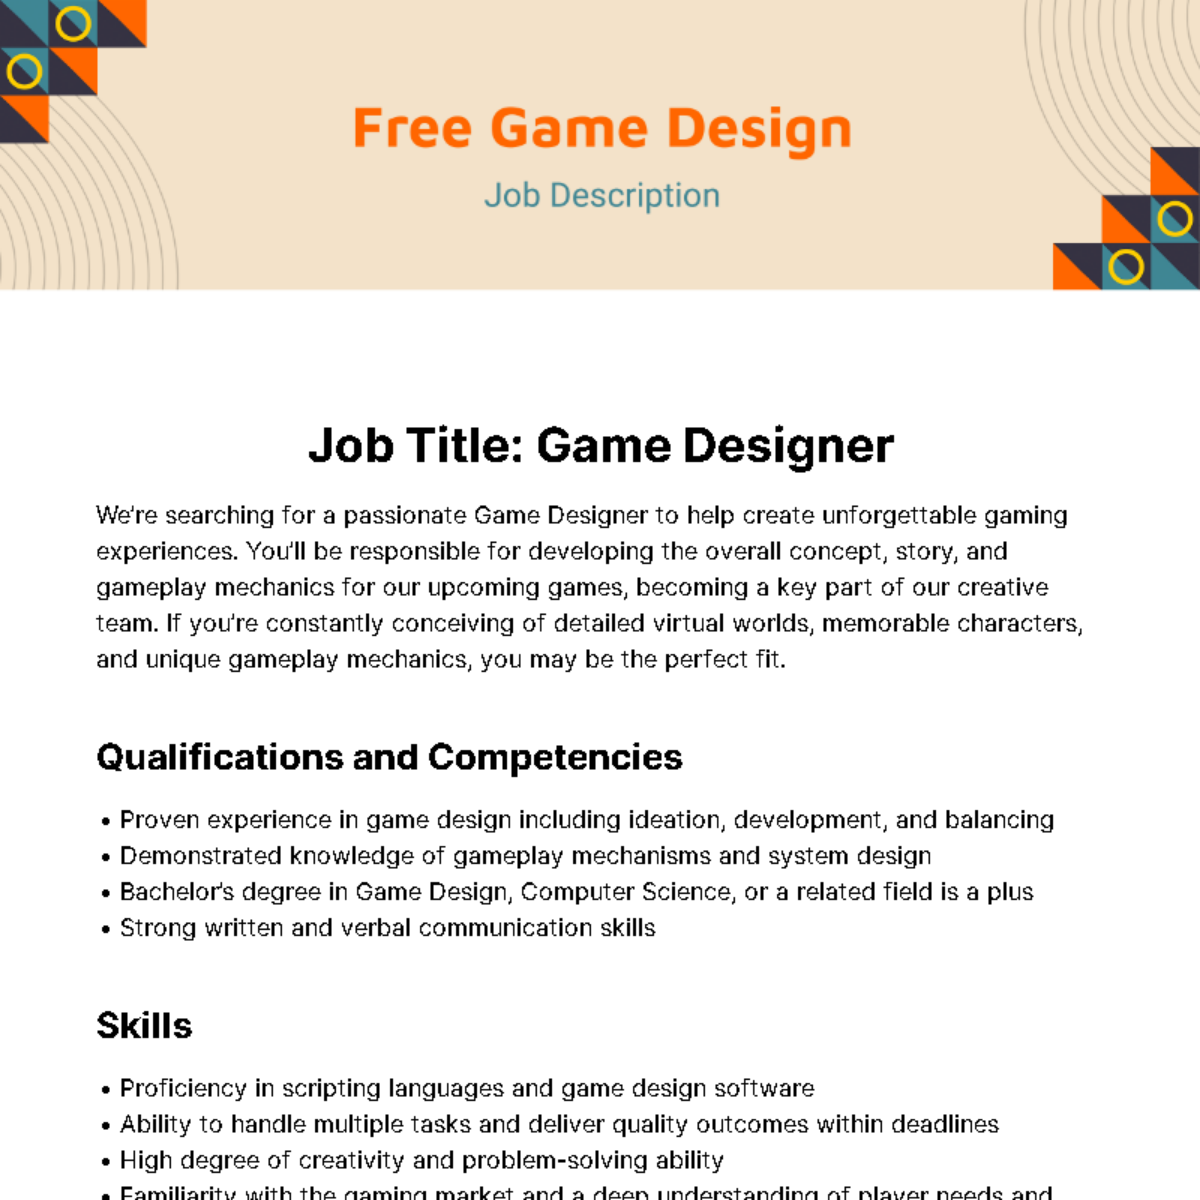 Free Game Design Job Description Template